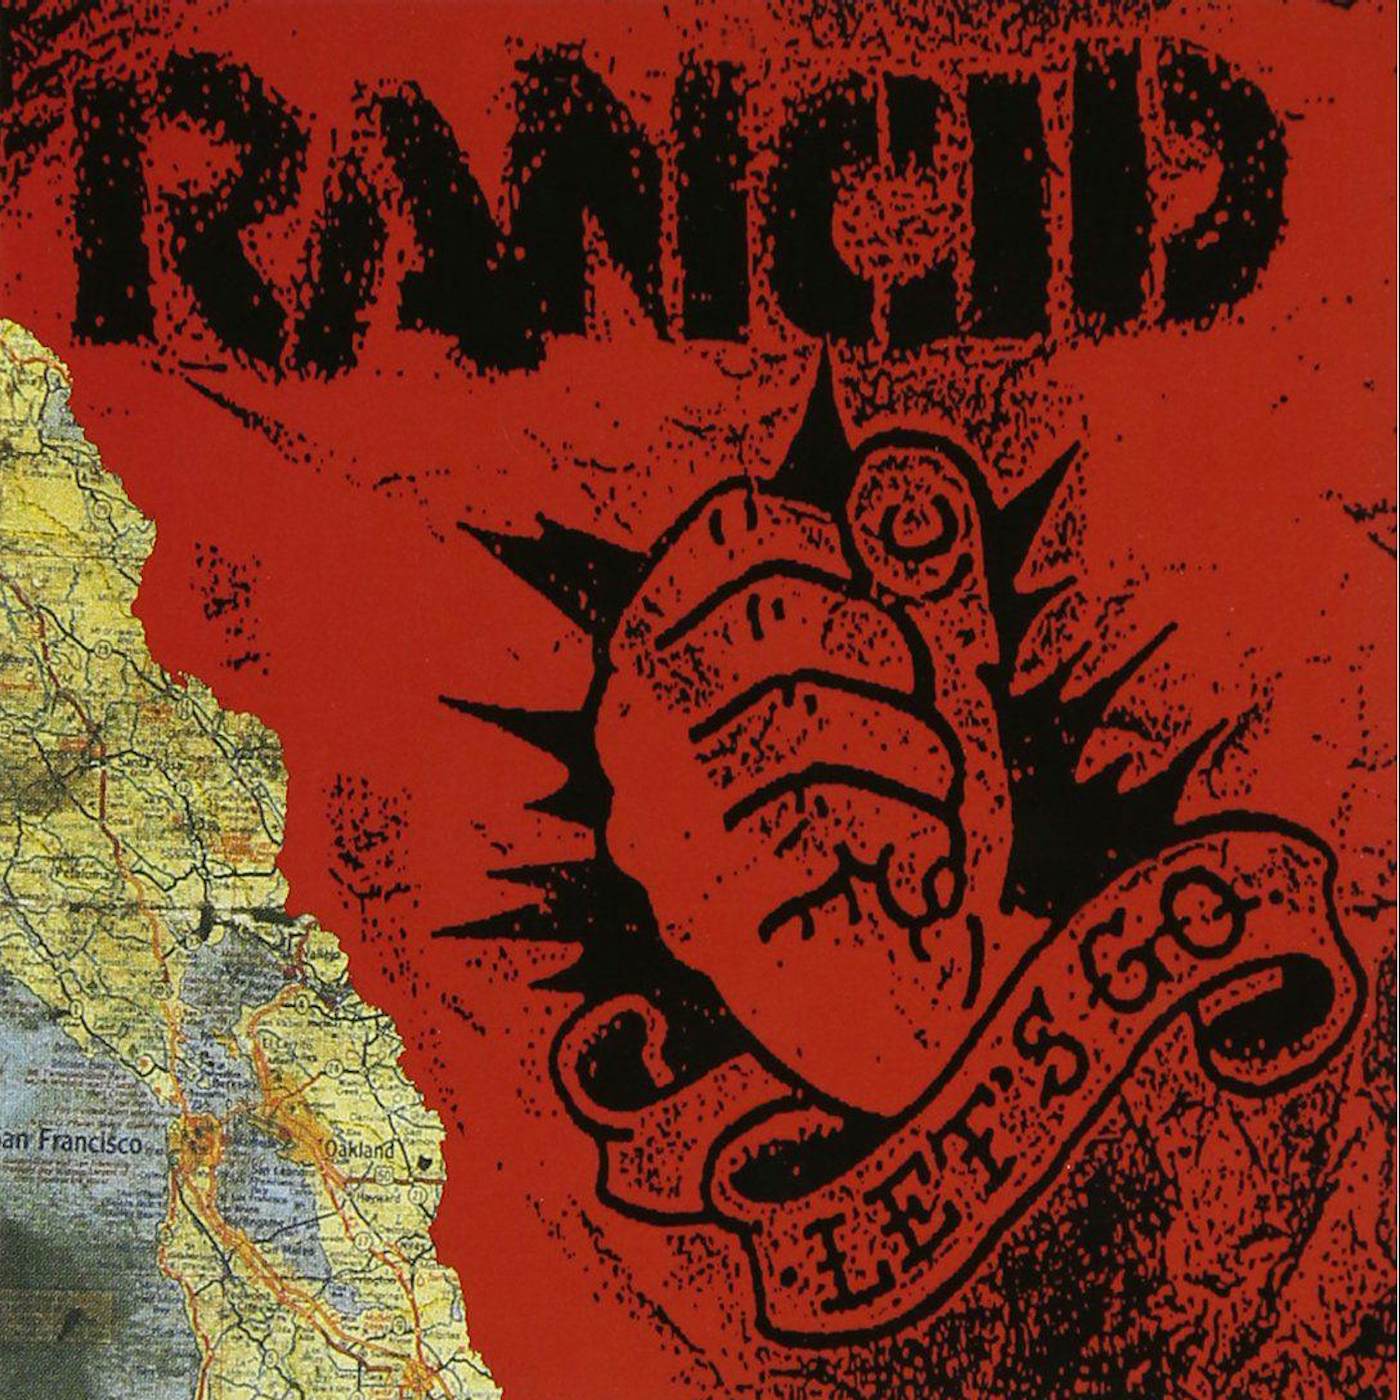 Rancid Let's Go: 20th Anniversary Reissue Vinyl Record